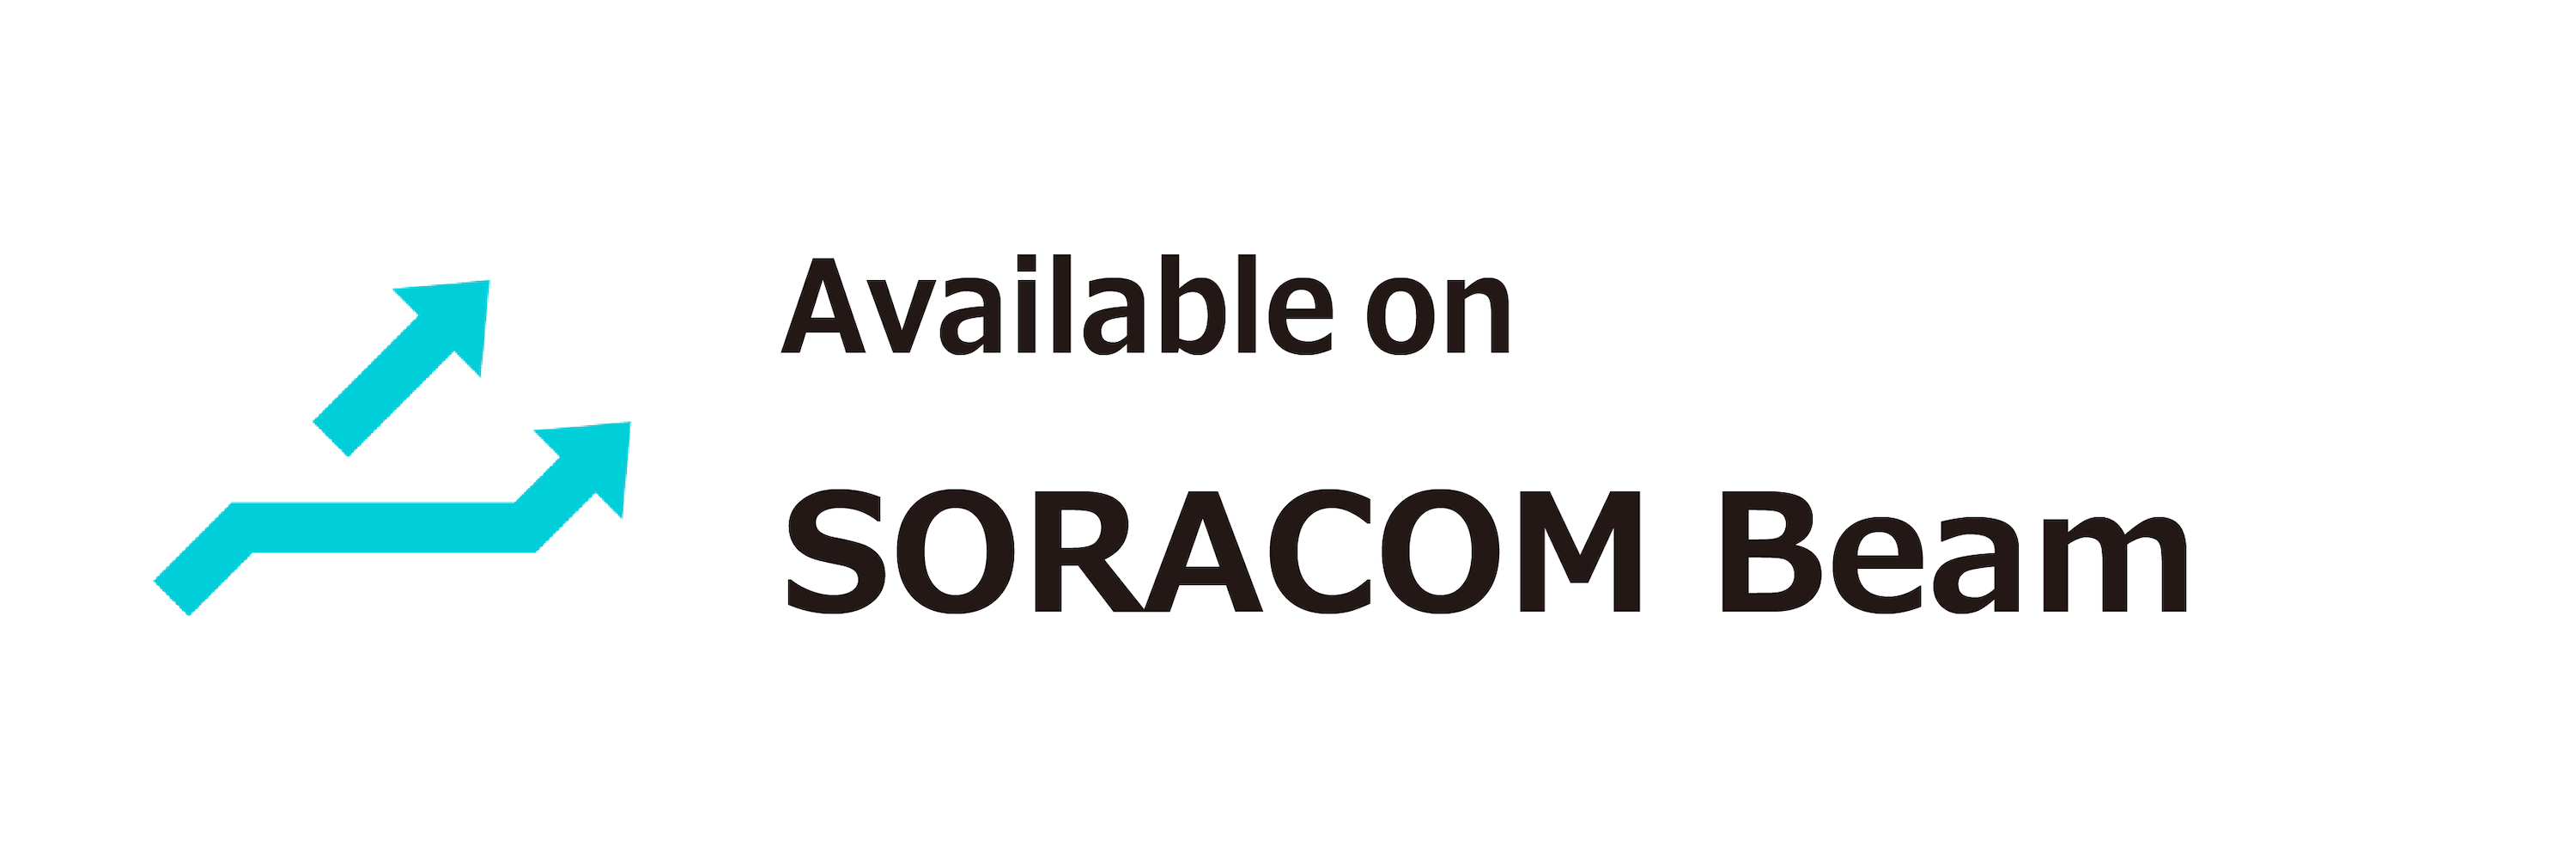 available on SORACOM Beam